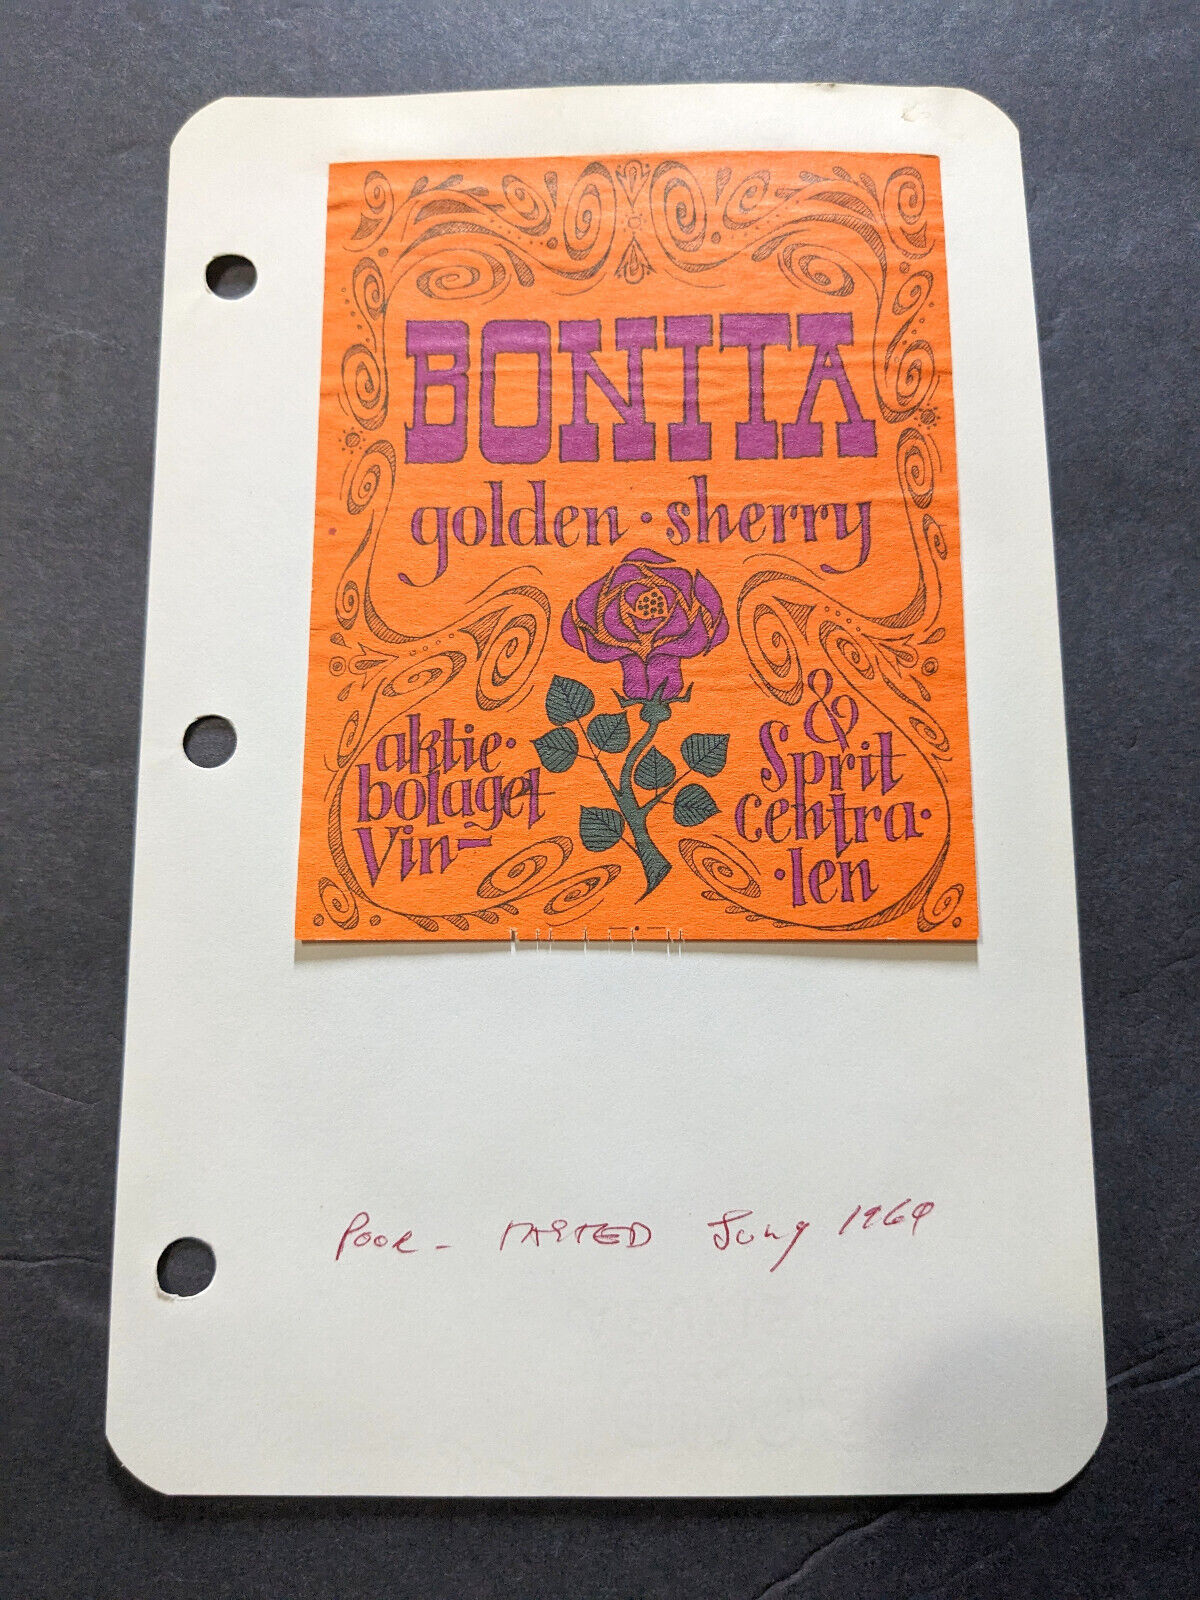 Vintage 1960s Bonita Golden Sherry Aktiebolaget Vin Sprit Centralen Label